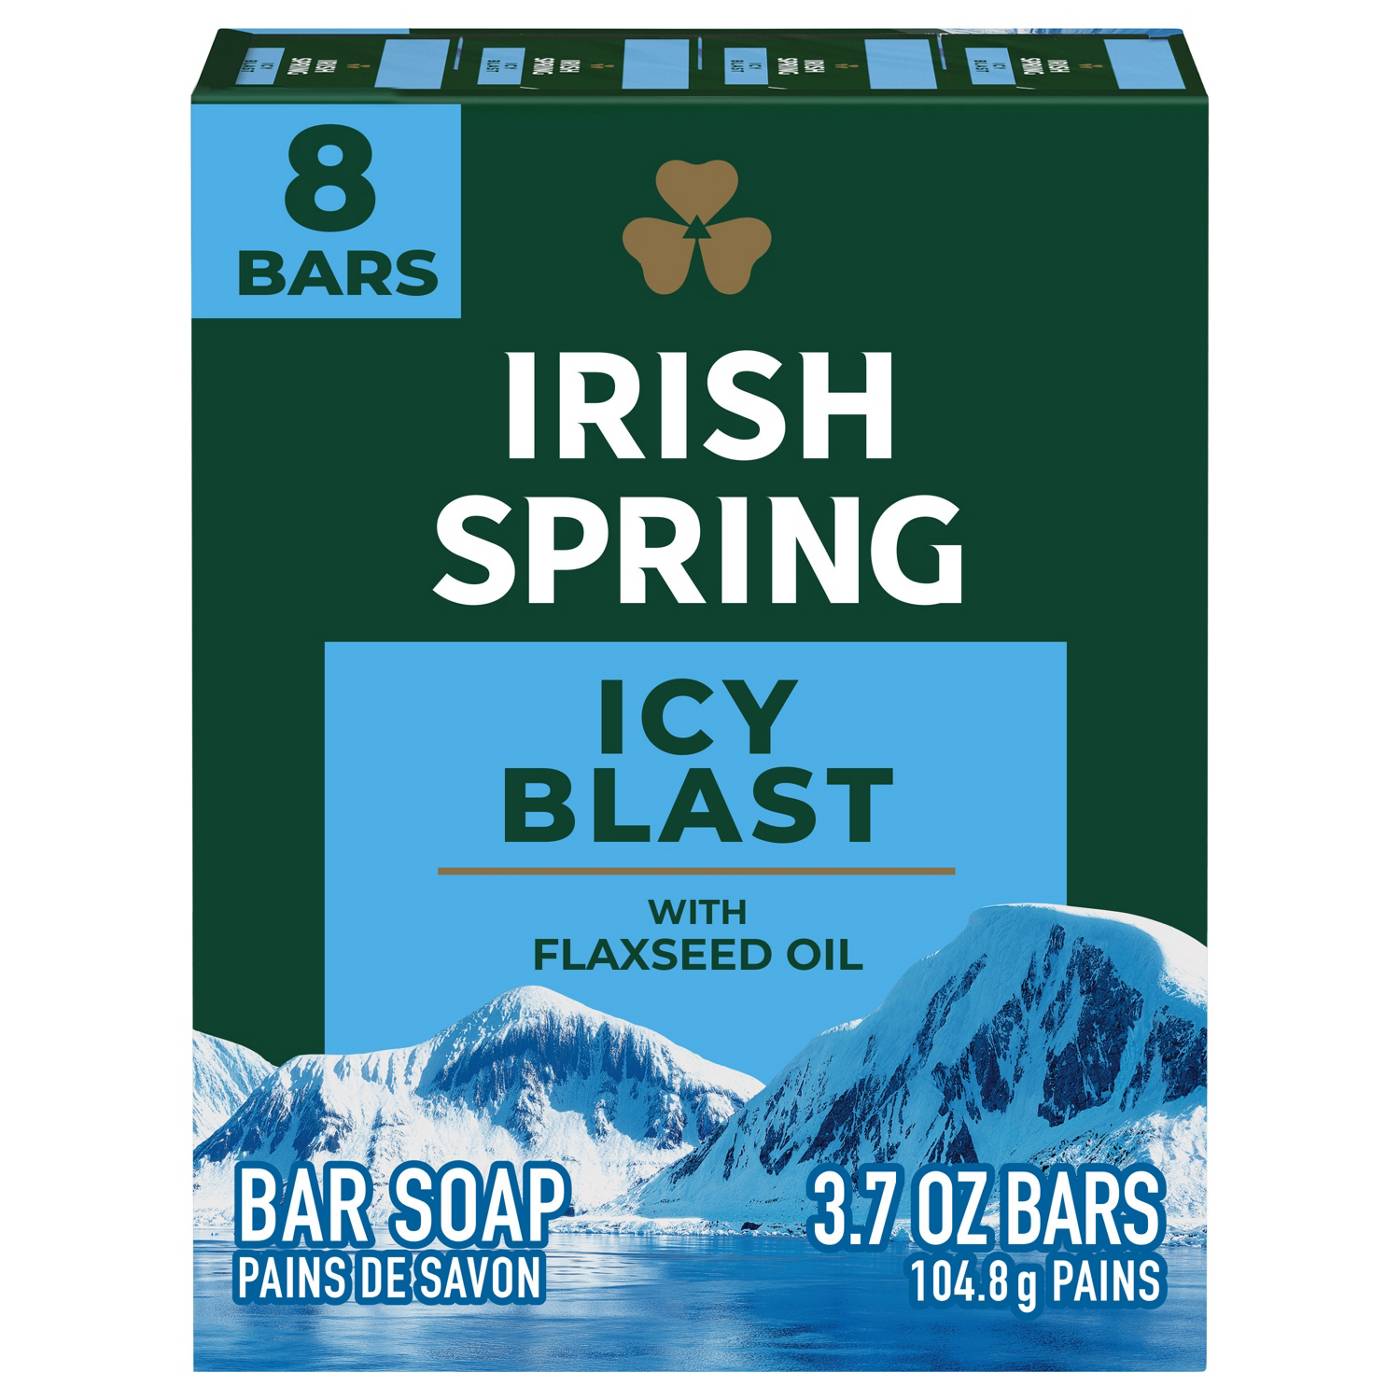 Irish Spring Icy Blast Deodorant Bar Soap for Men; image 1 of 10